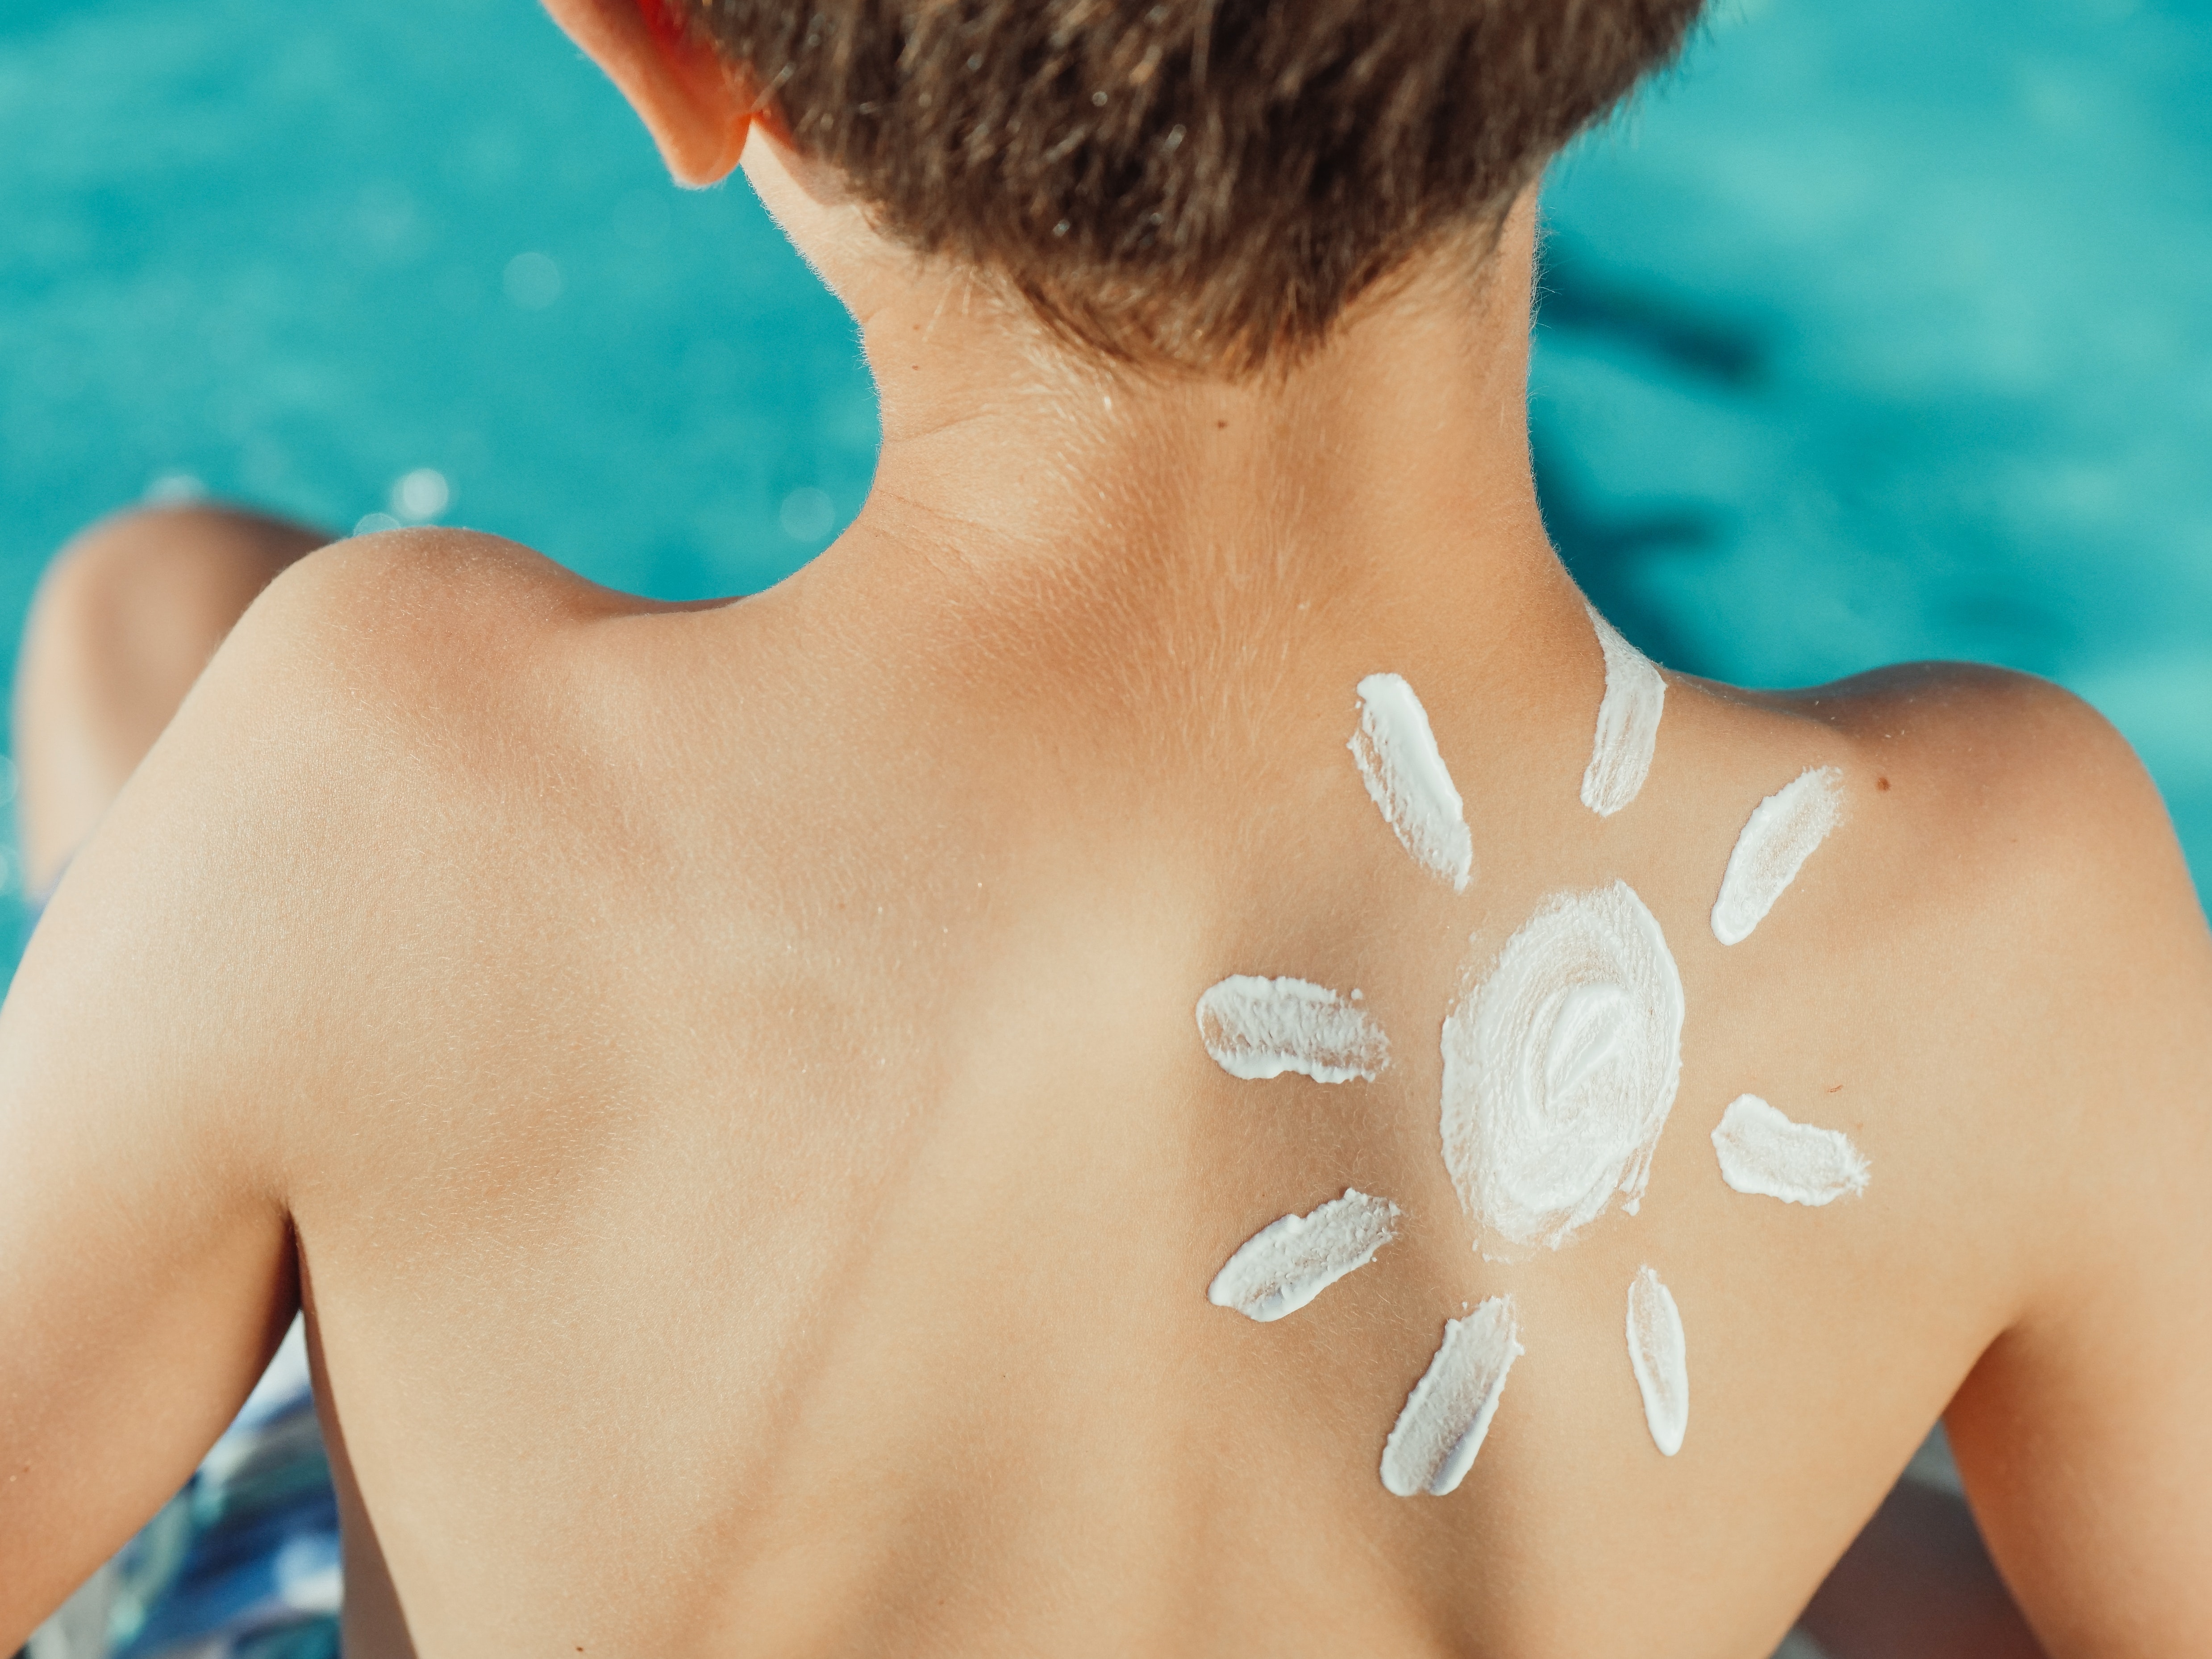 Children's sunscreens